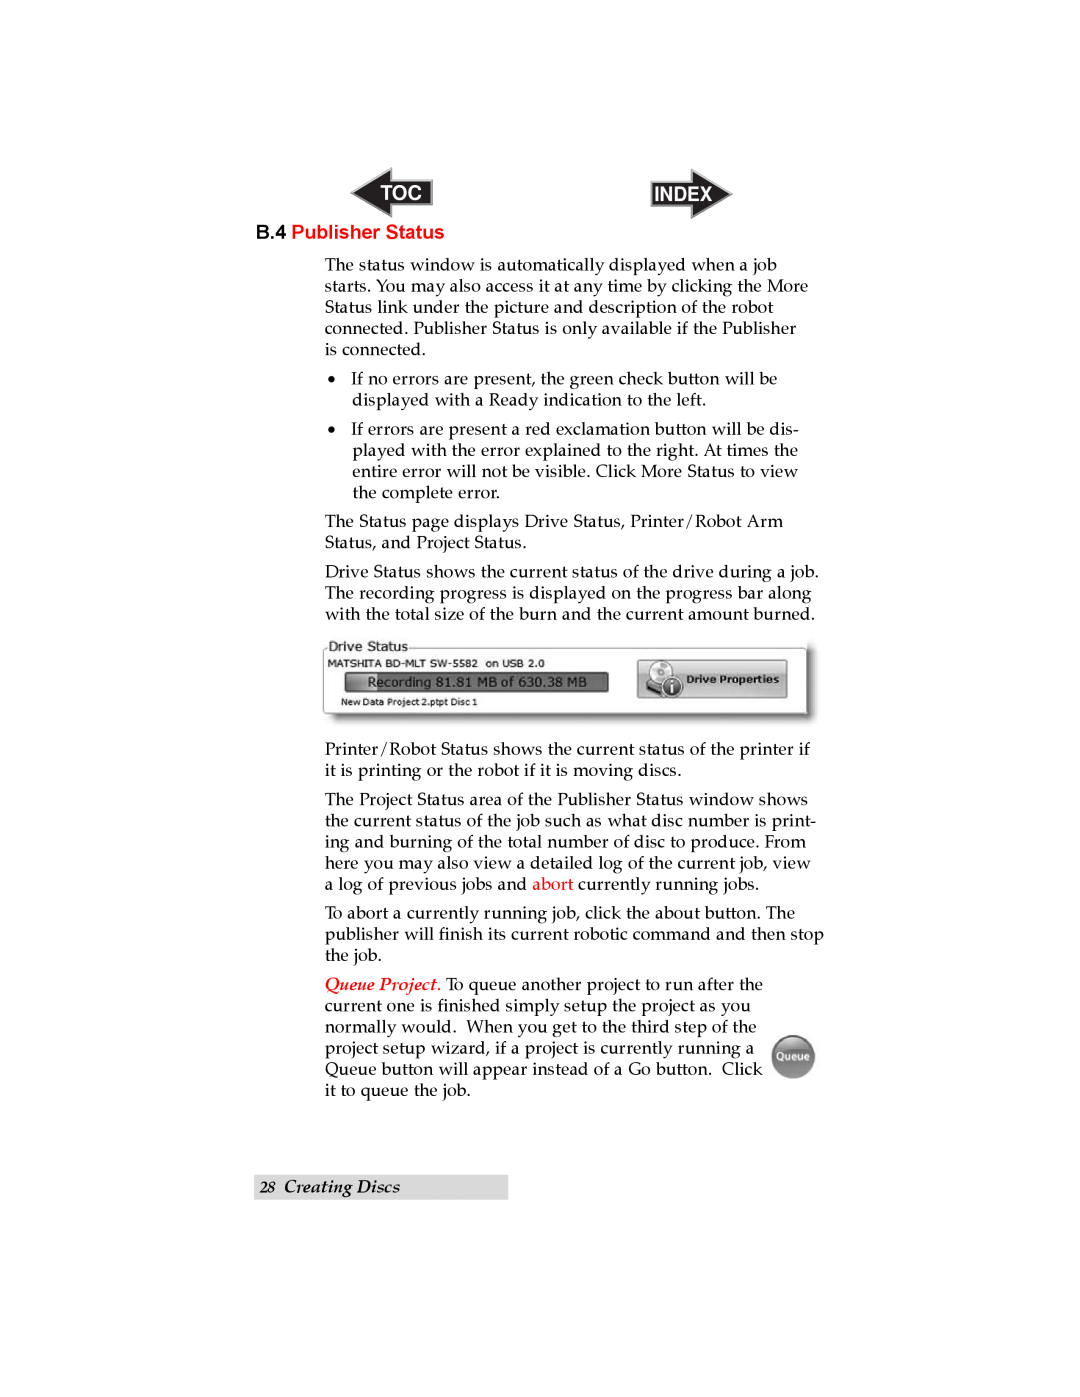 Primera Technology 032910-511262 user manual B.4 Publisher Status, Creating Discs, Index 